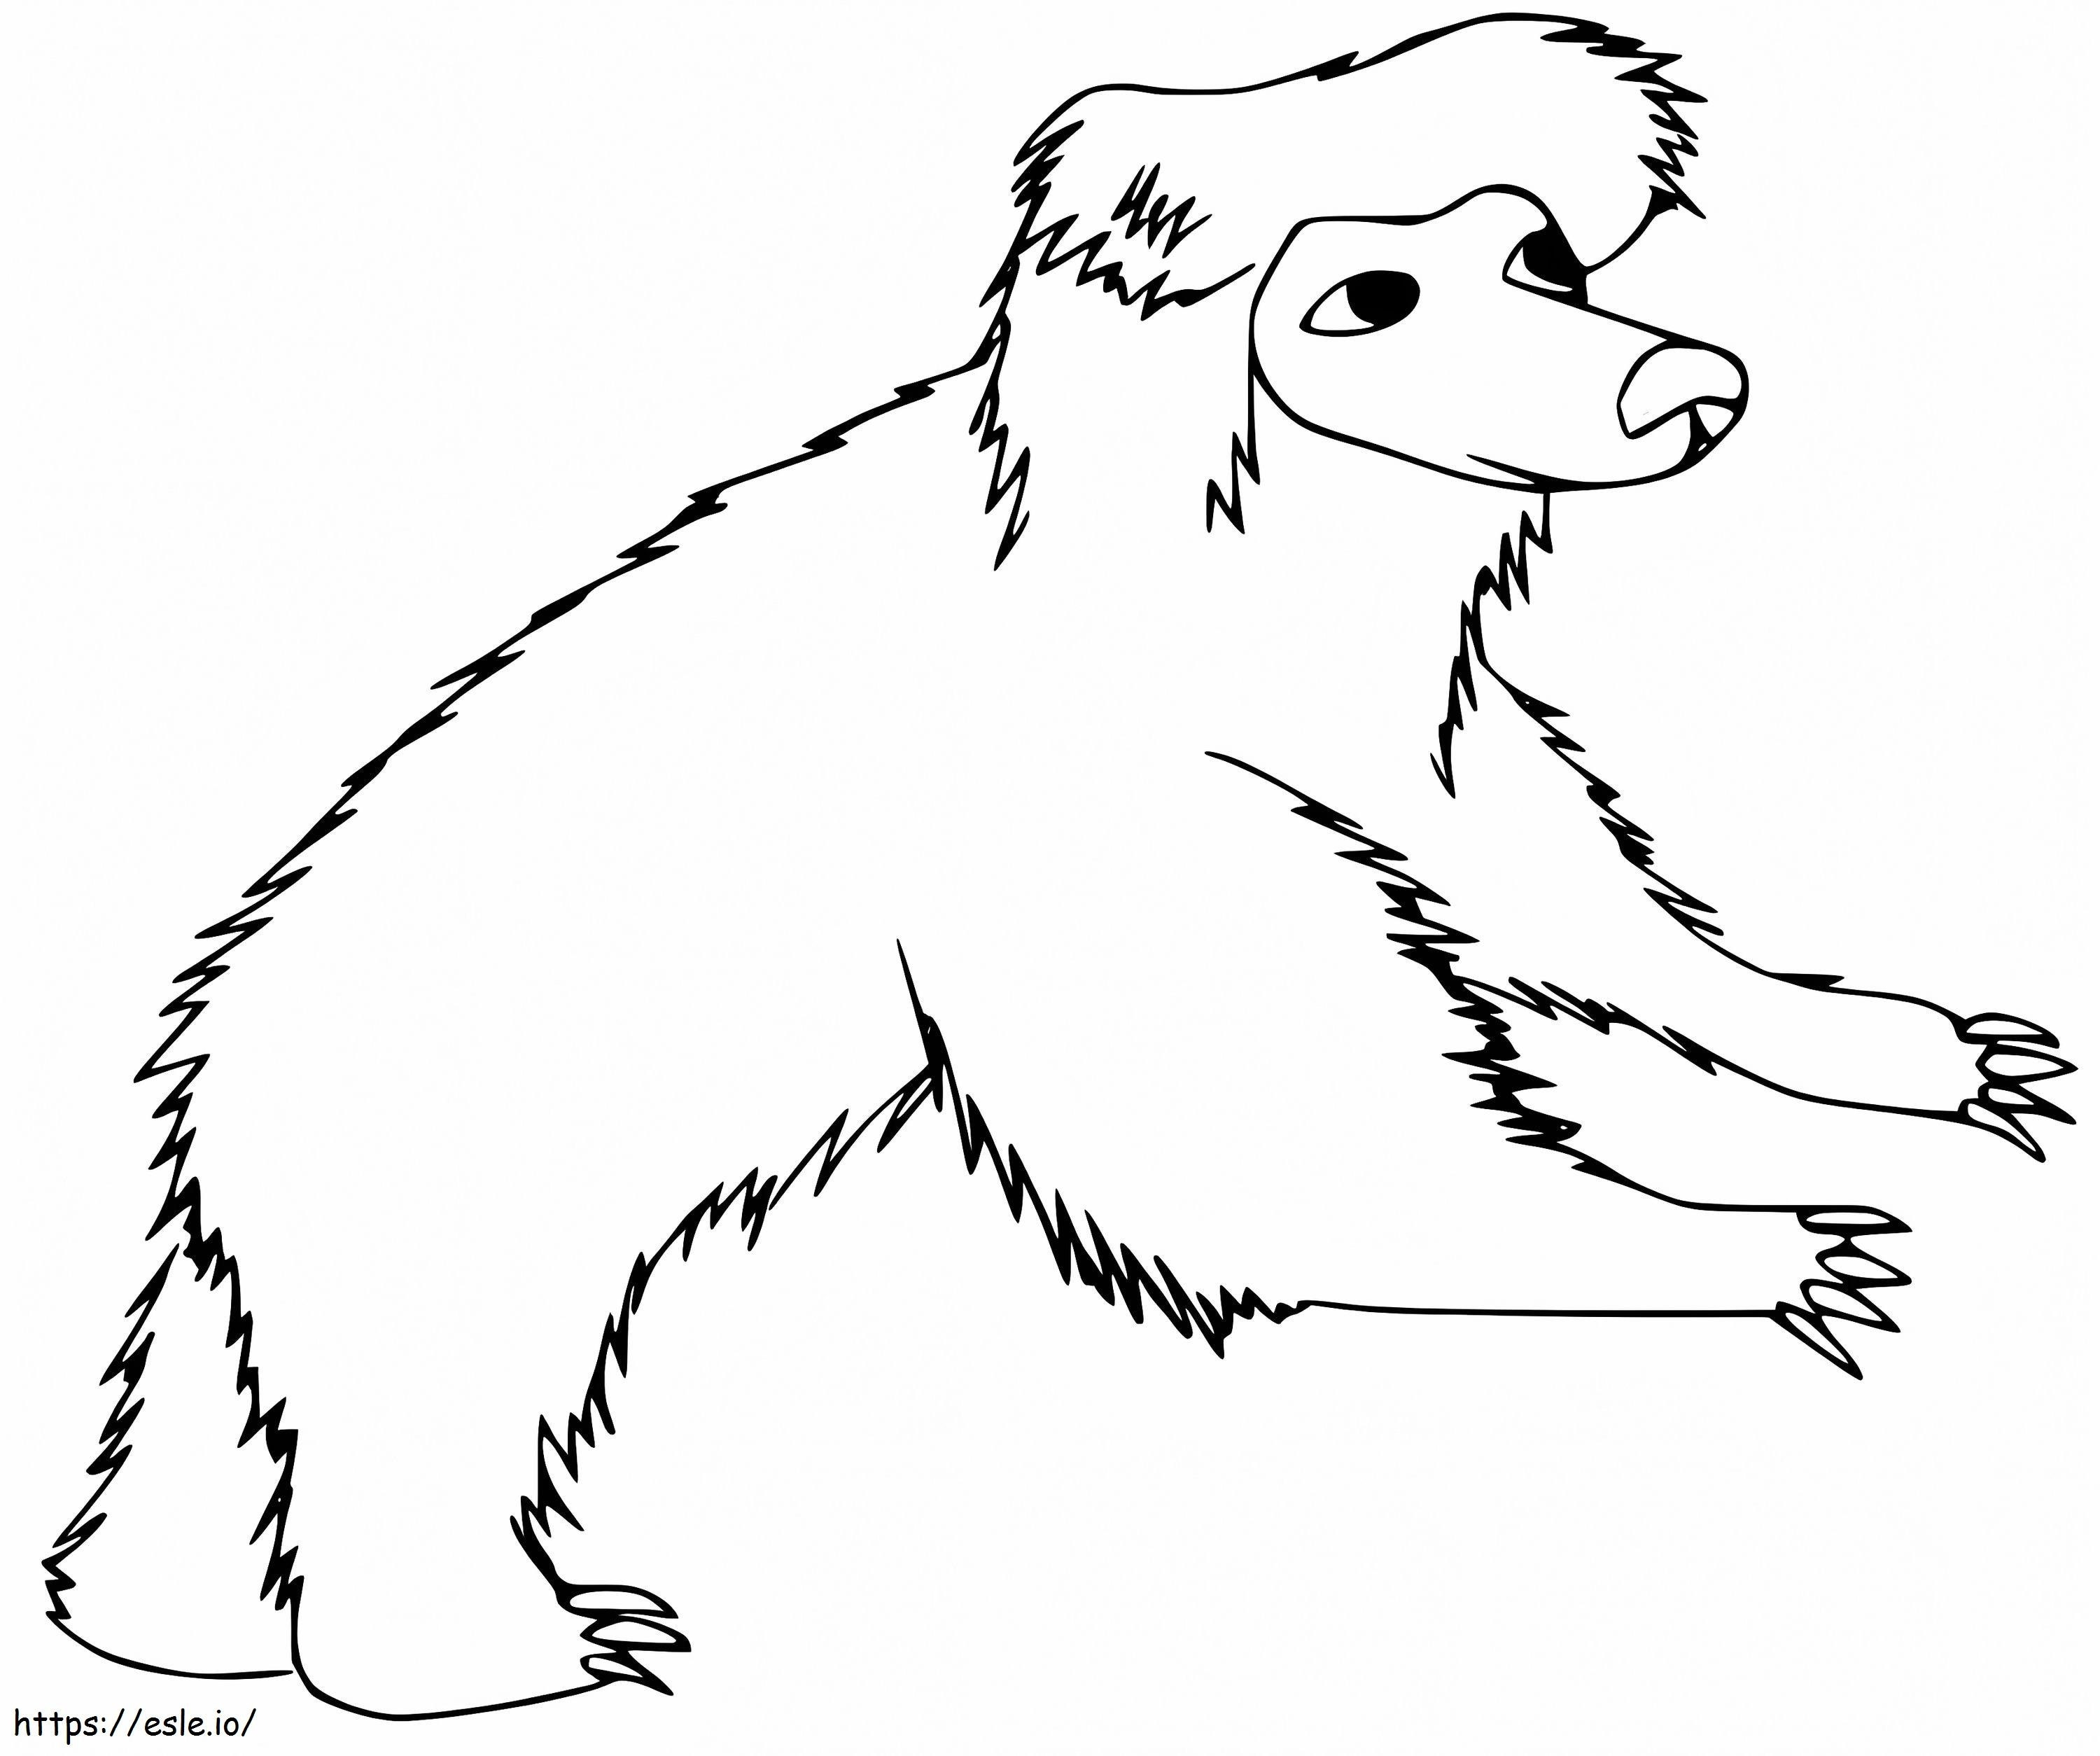 A Sloth Bear coloring page